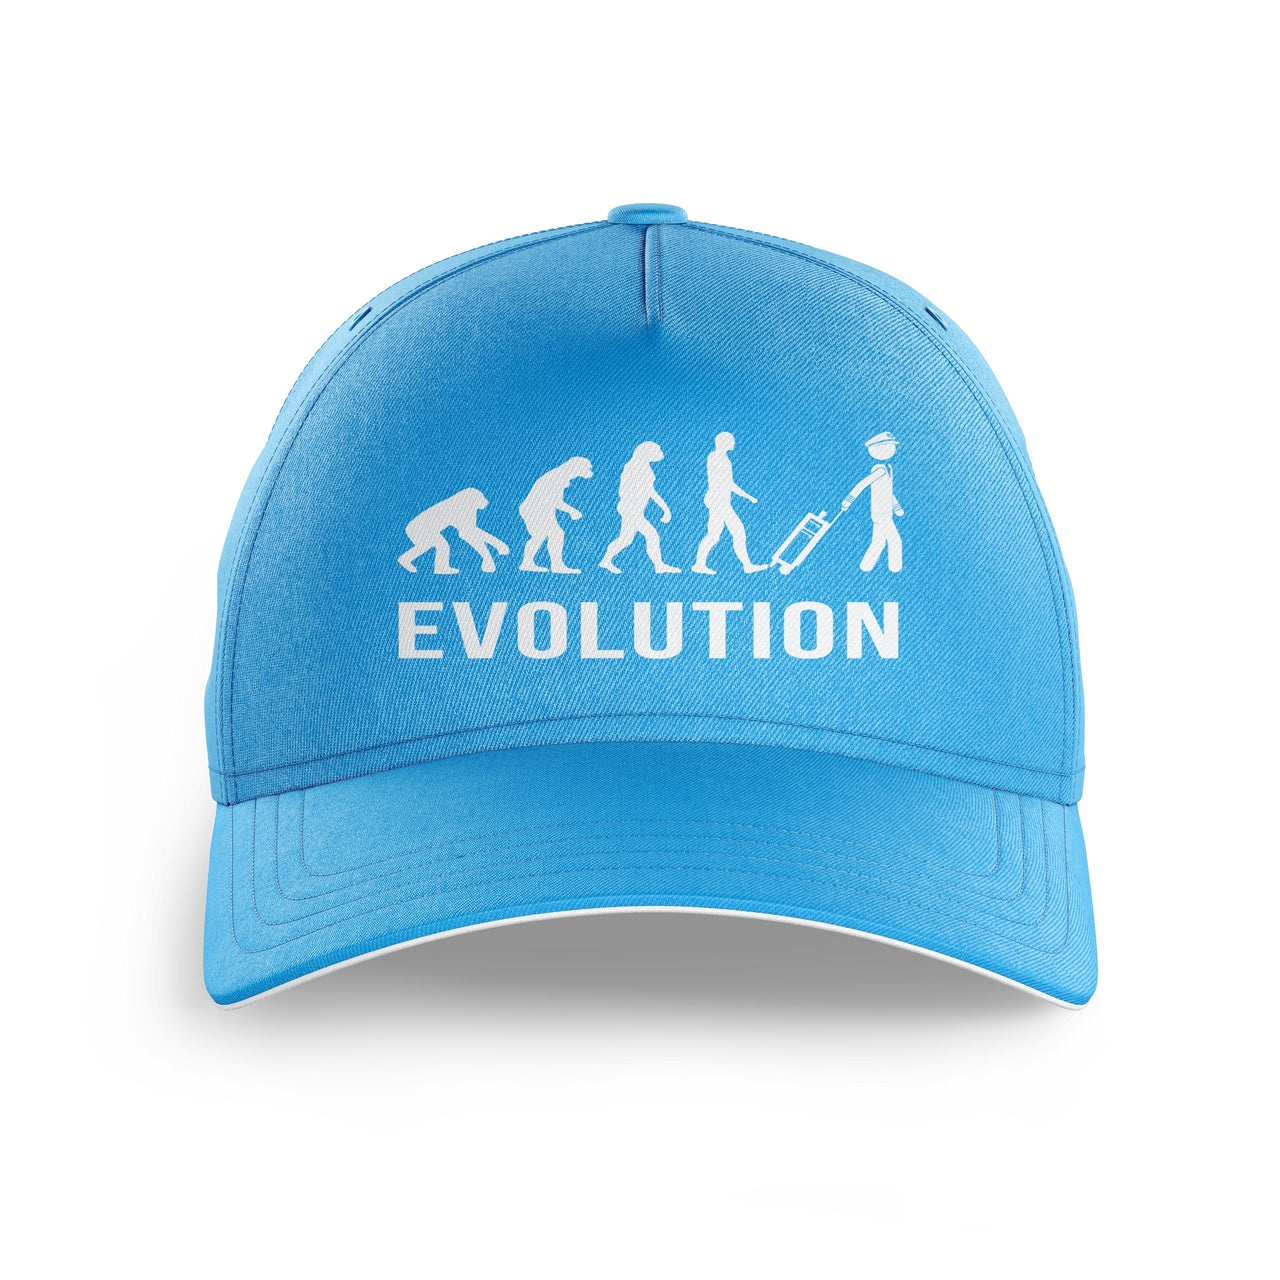 Pilot Evolution Printed Hats